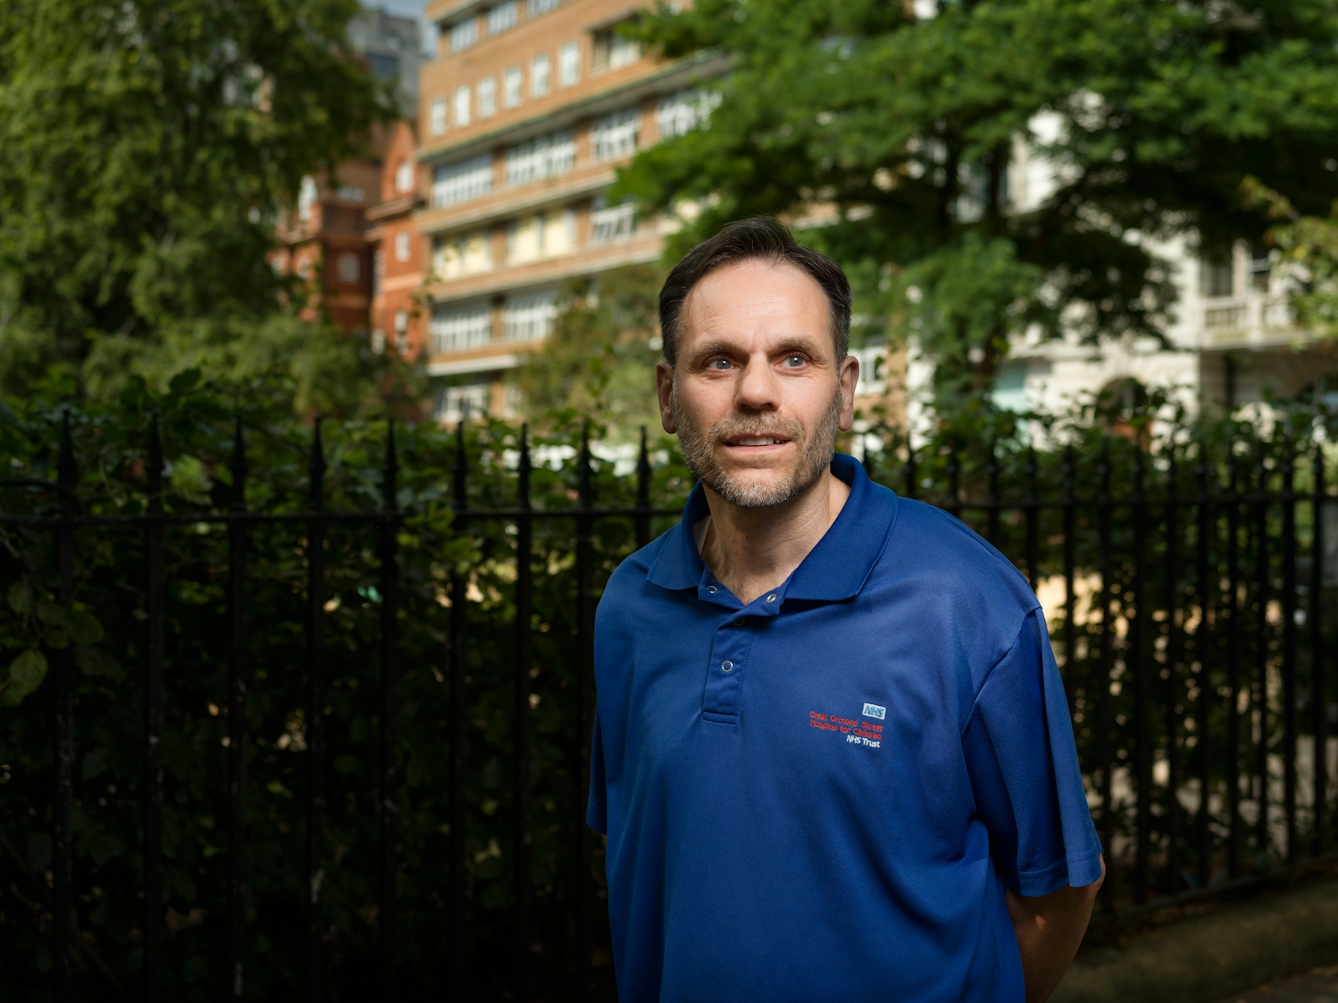 Photographic portrait of Adrian Godbold, a hospital porter, outside Great Ormond Street Hospital, London.